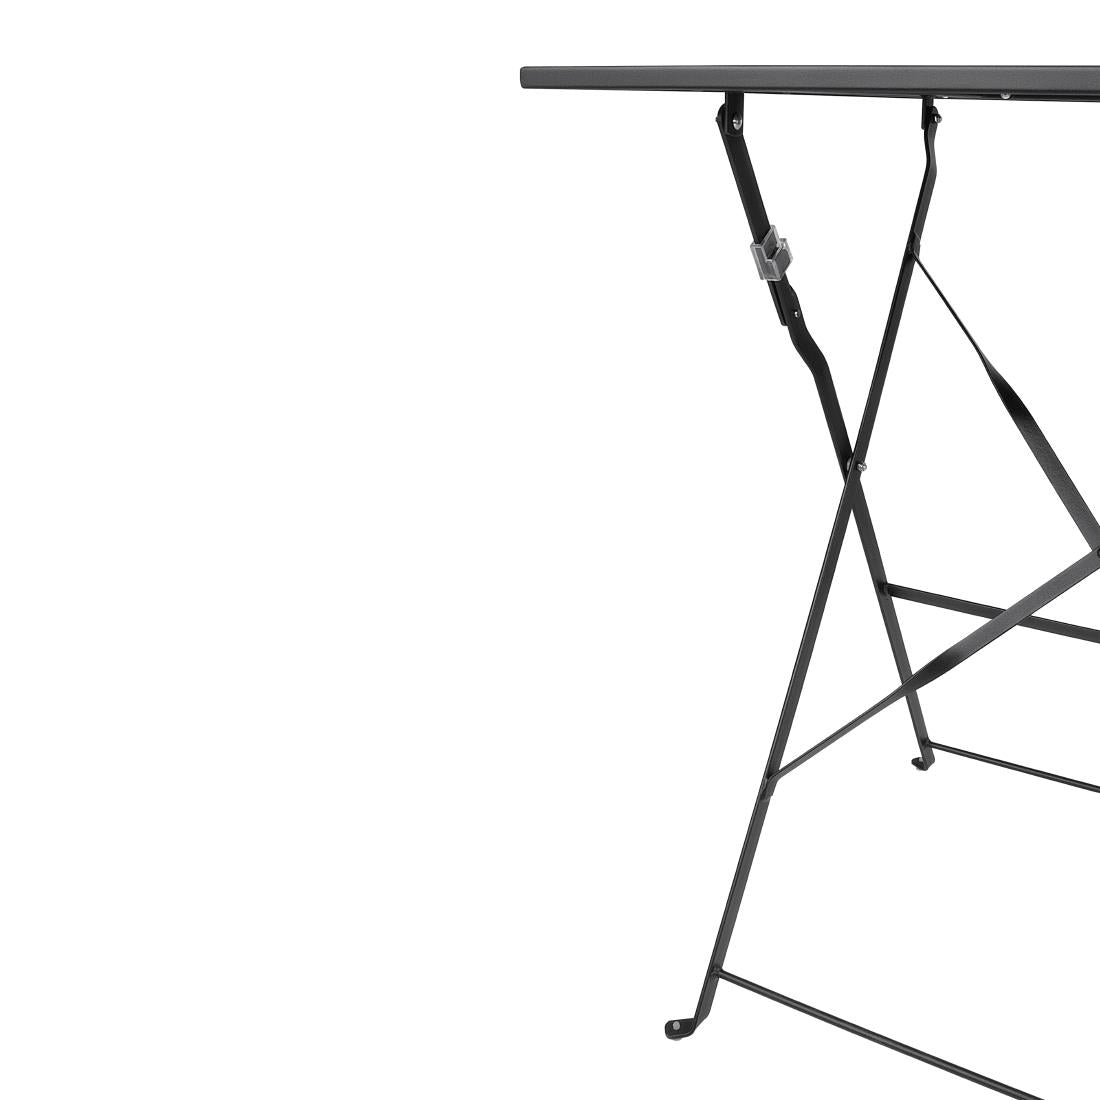 Bolero Black Square Pavement Style Steel Table JD Catering Equipment Solutions Ltd